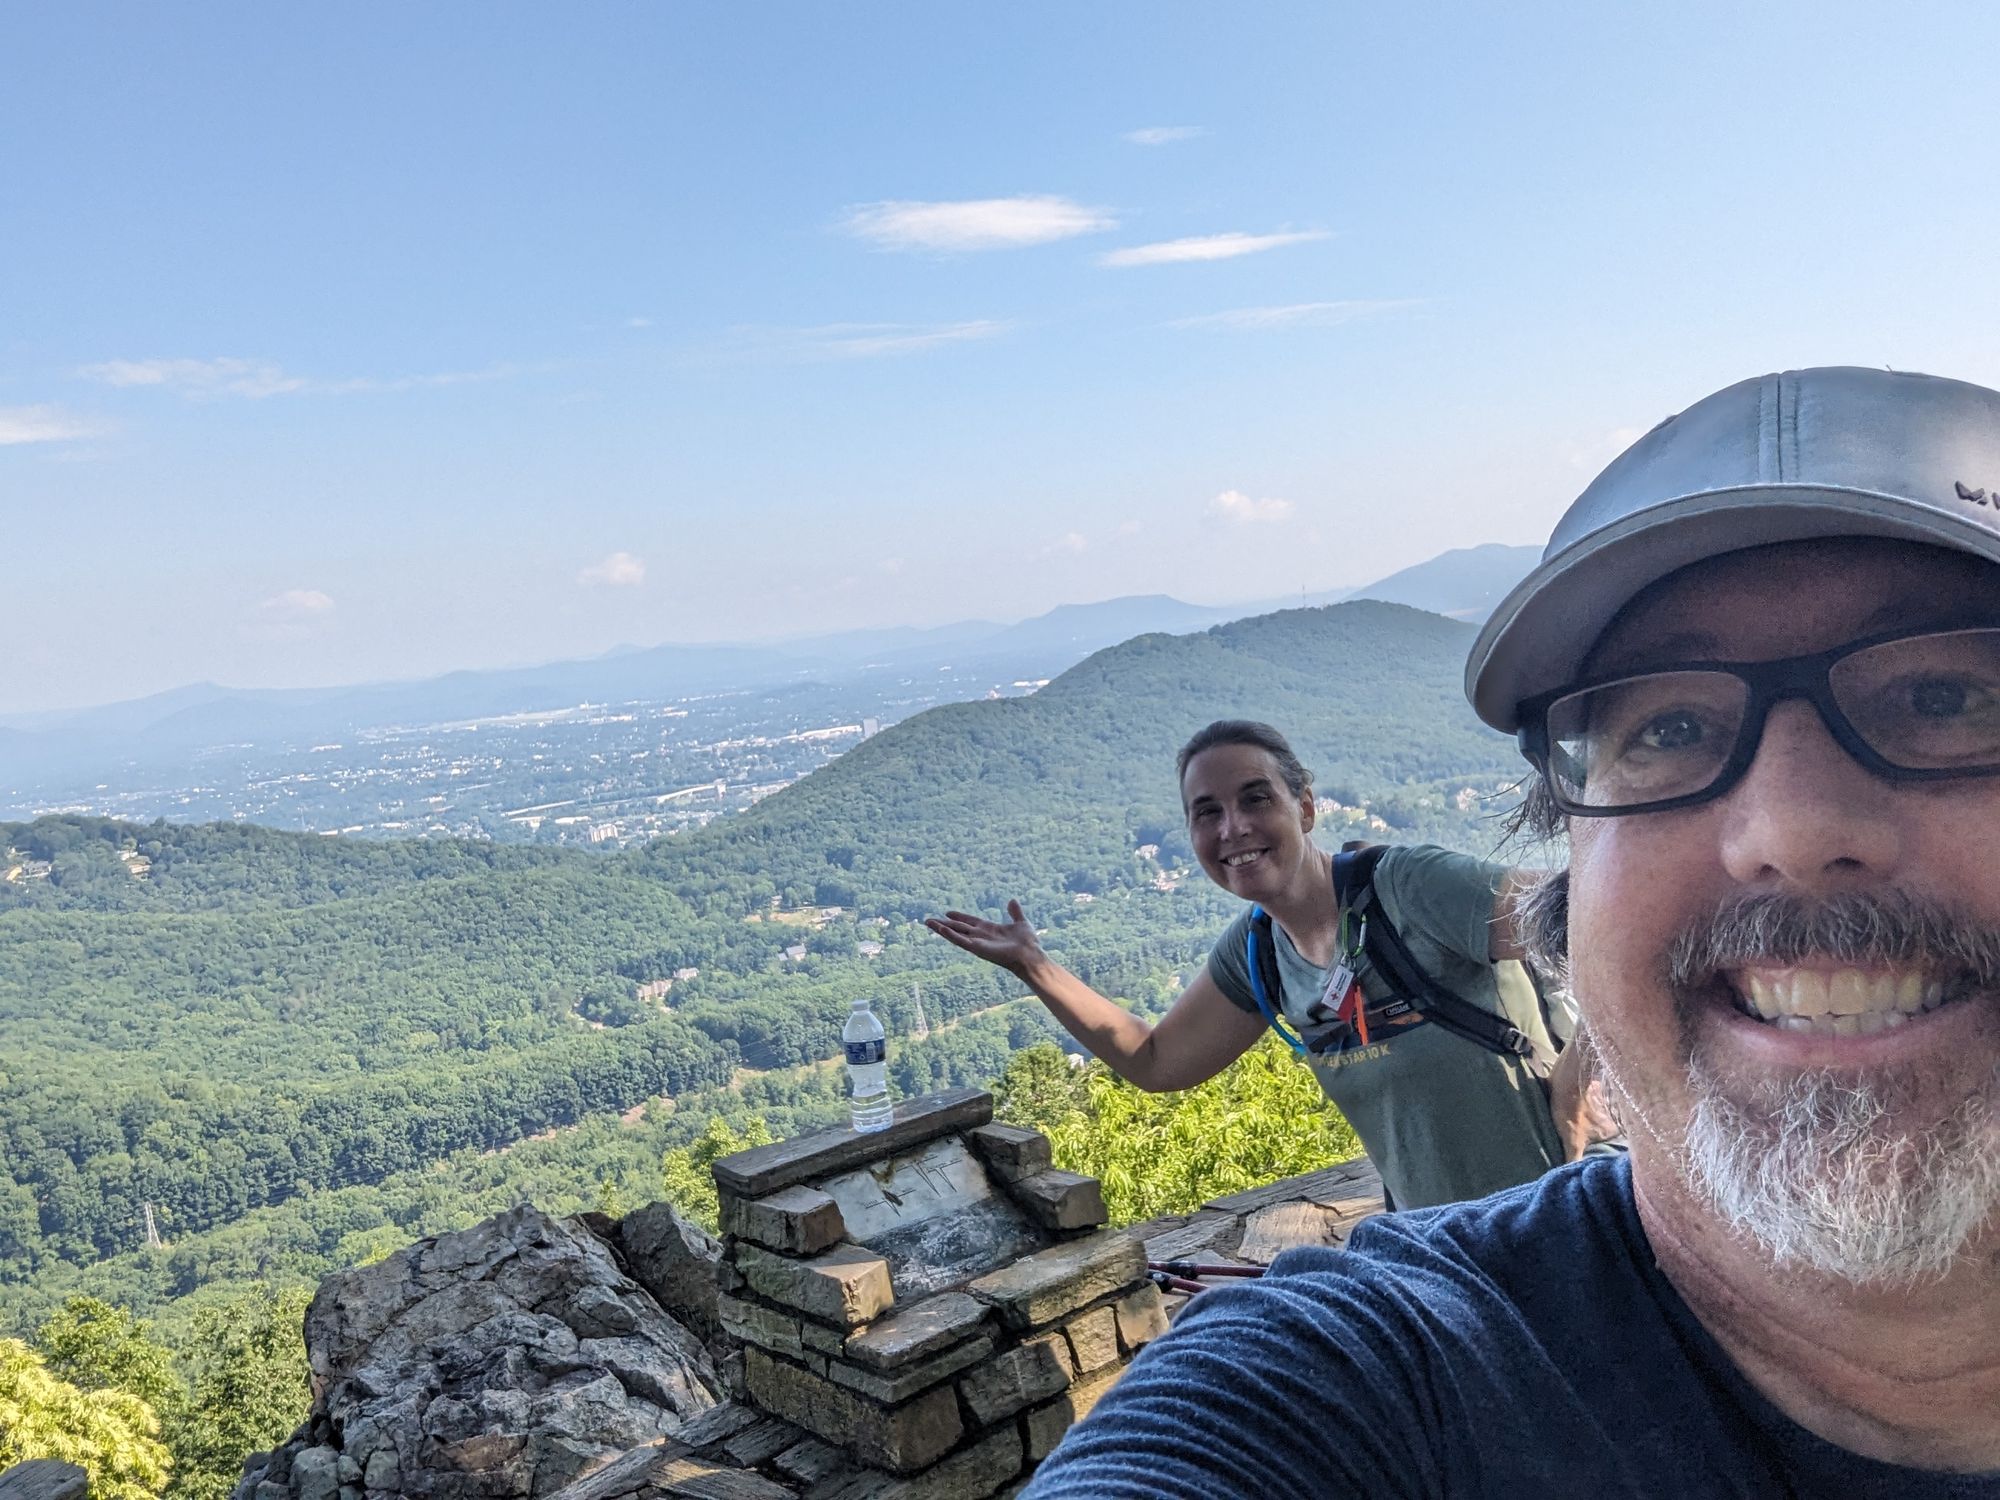 Title: Roanoke Mountain Hike: A Scenic Adventure in the Blue Ridge Mountains